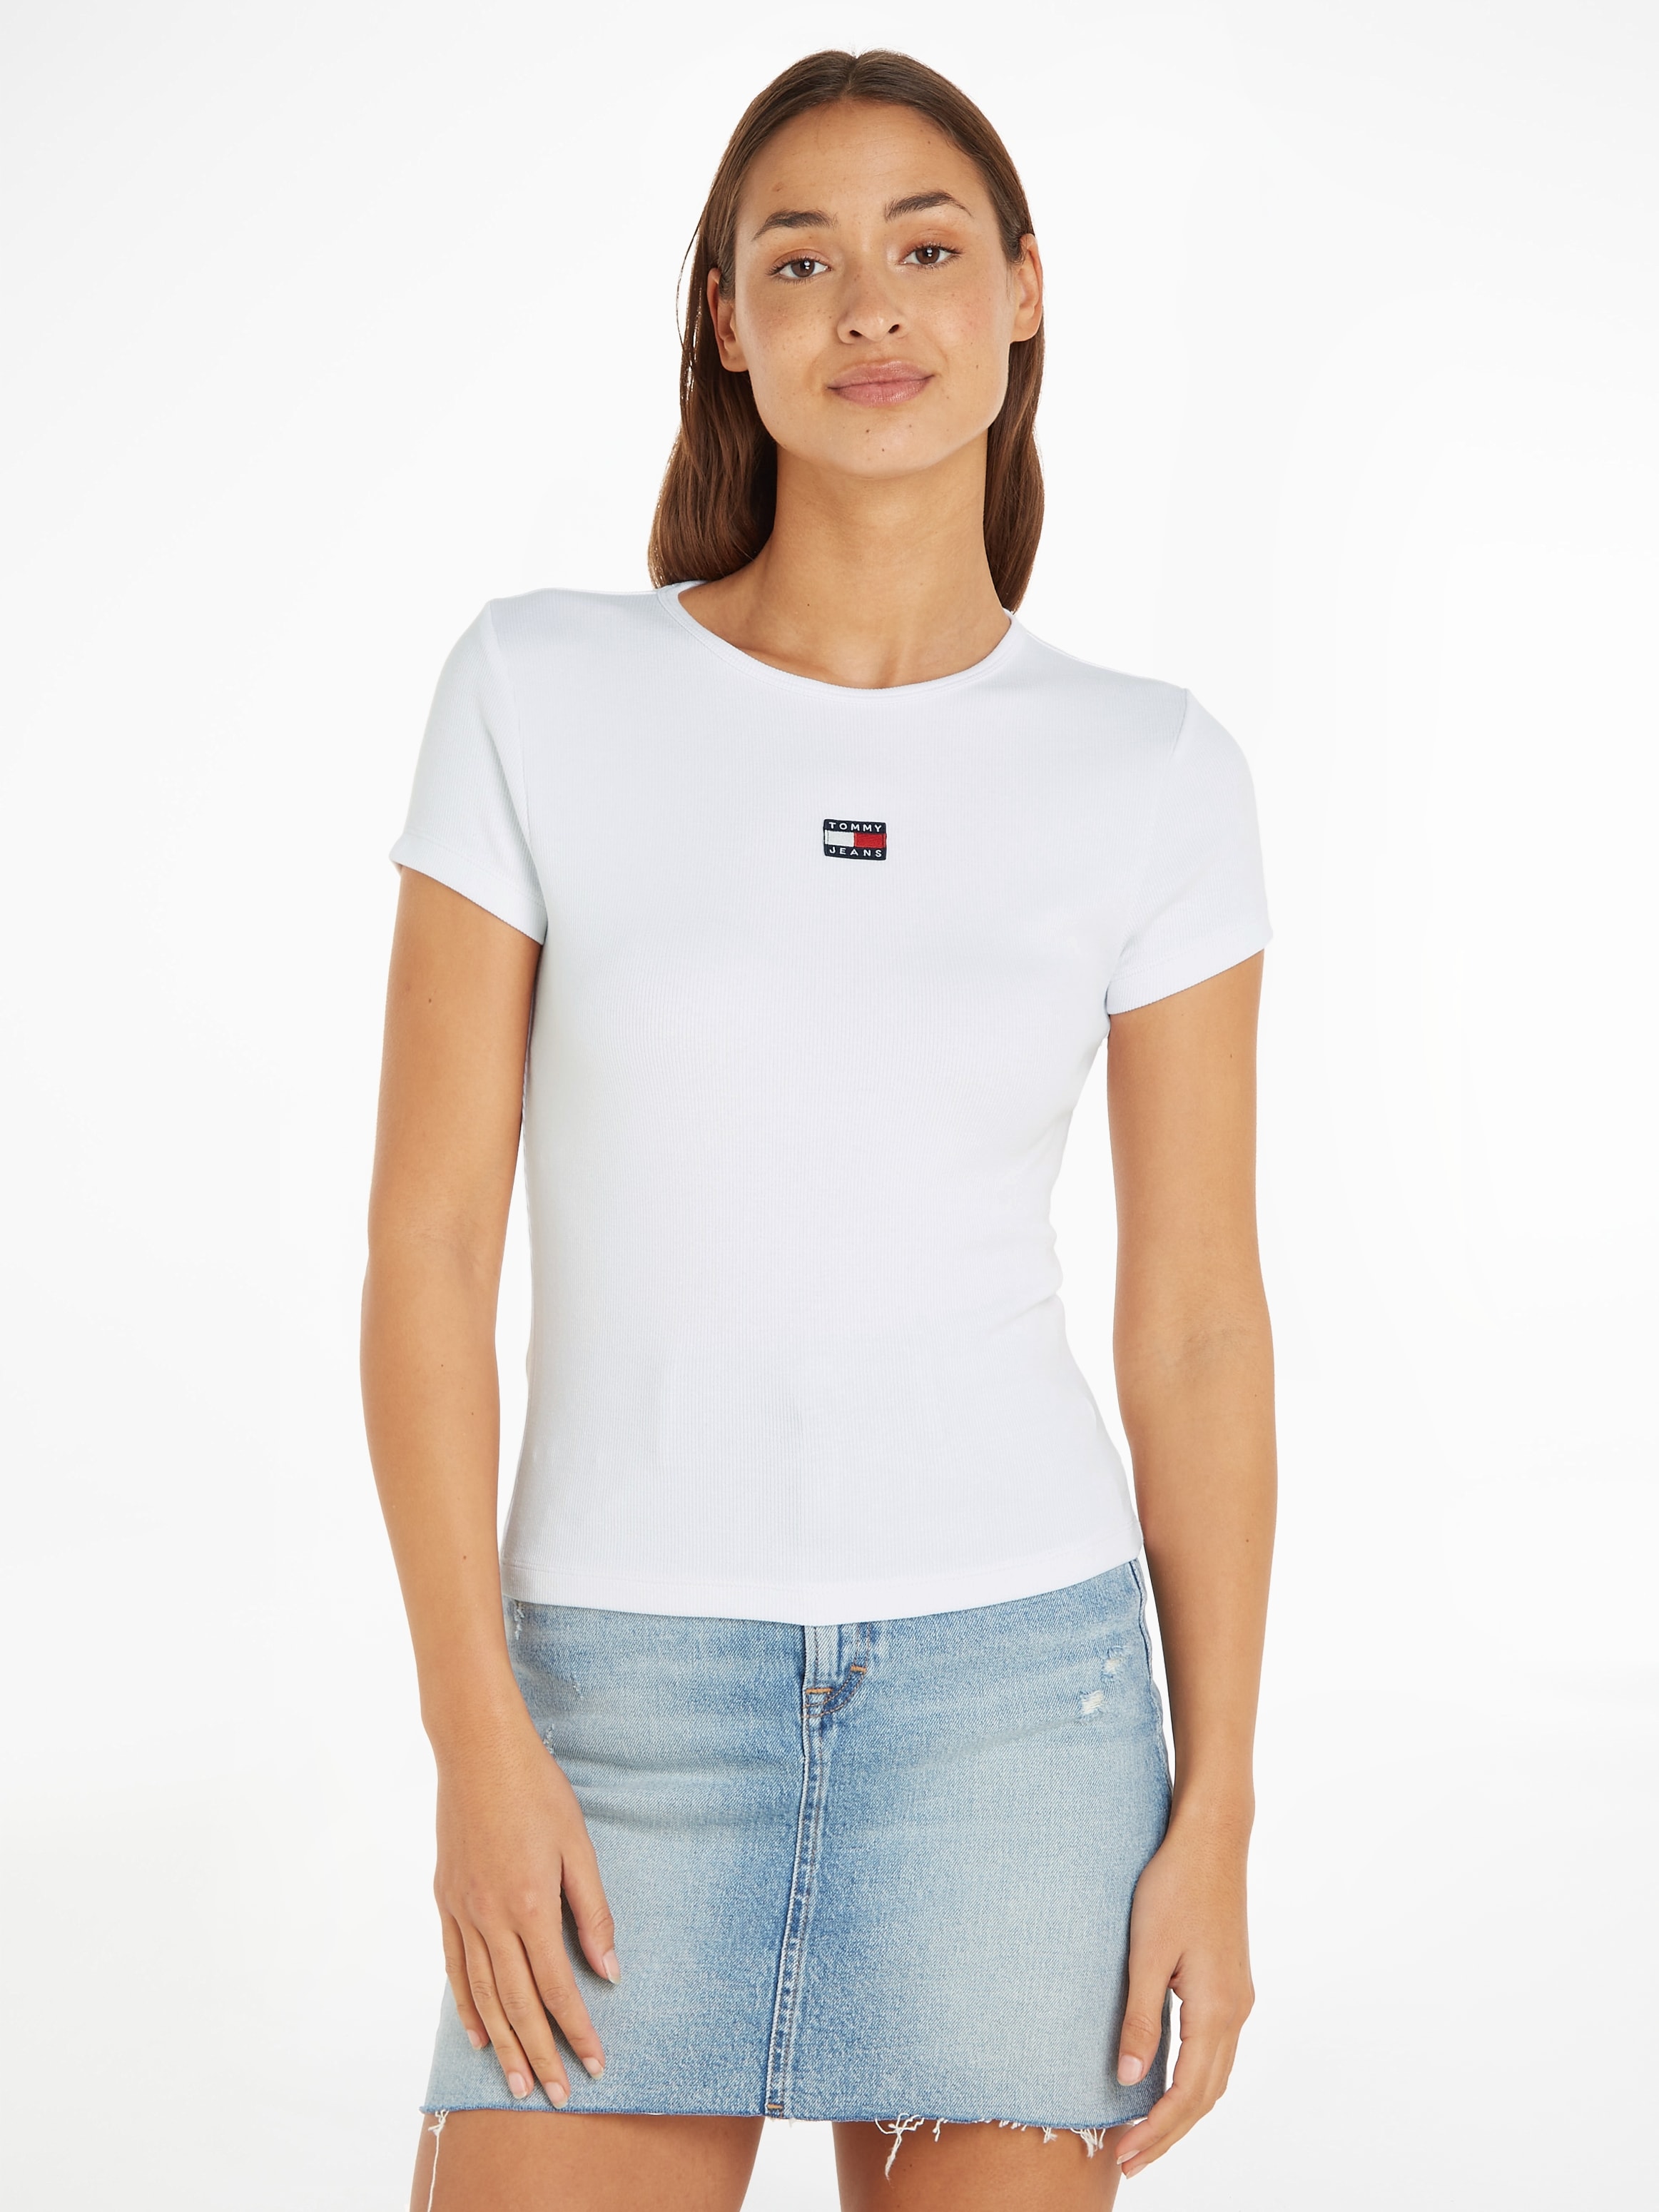 XS RIB TEE«, Jeans BBY Tommy BADGE Logobadge »TJW kaufen mit T-Shirt